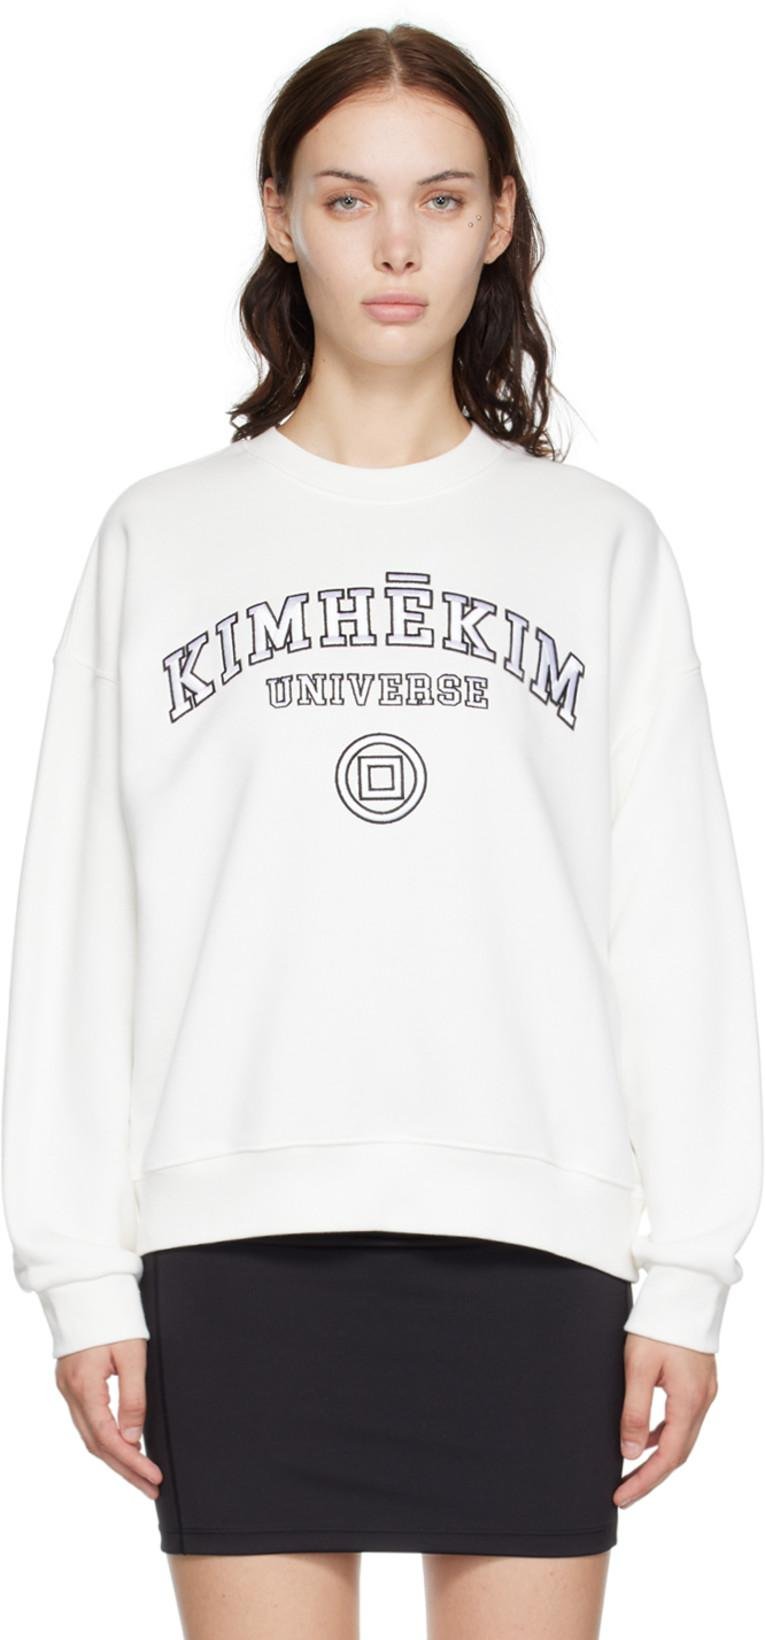 White 'Universe' Sweatshirt by KIMHEKIM